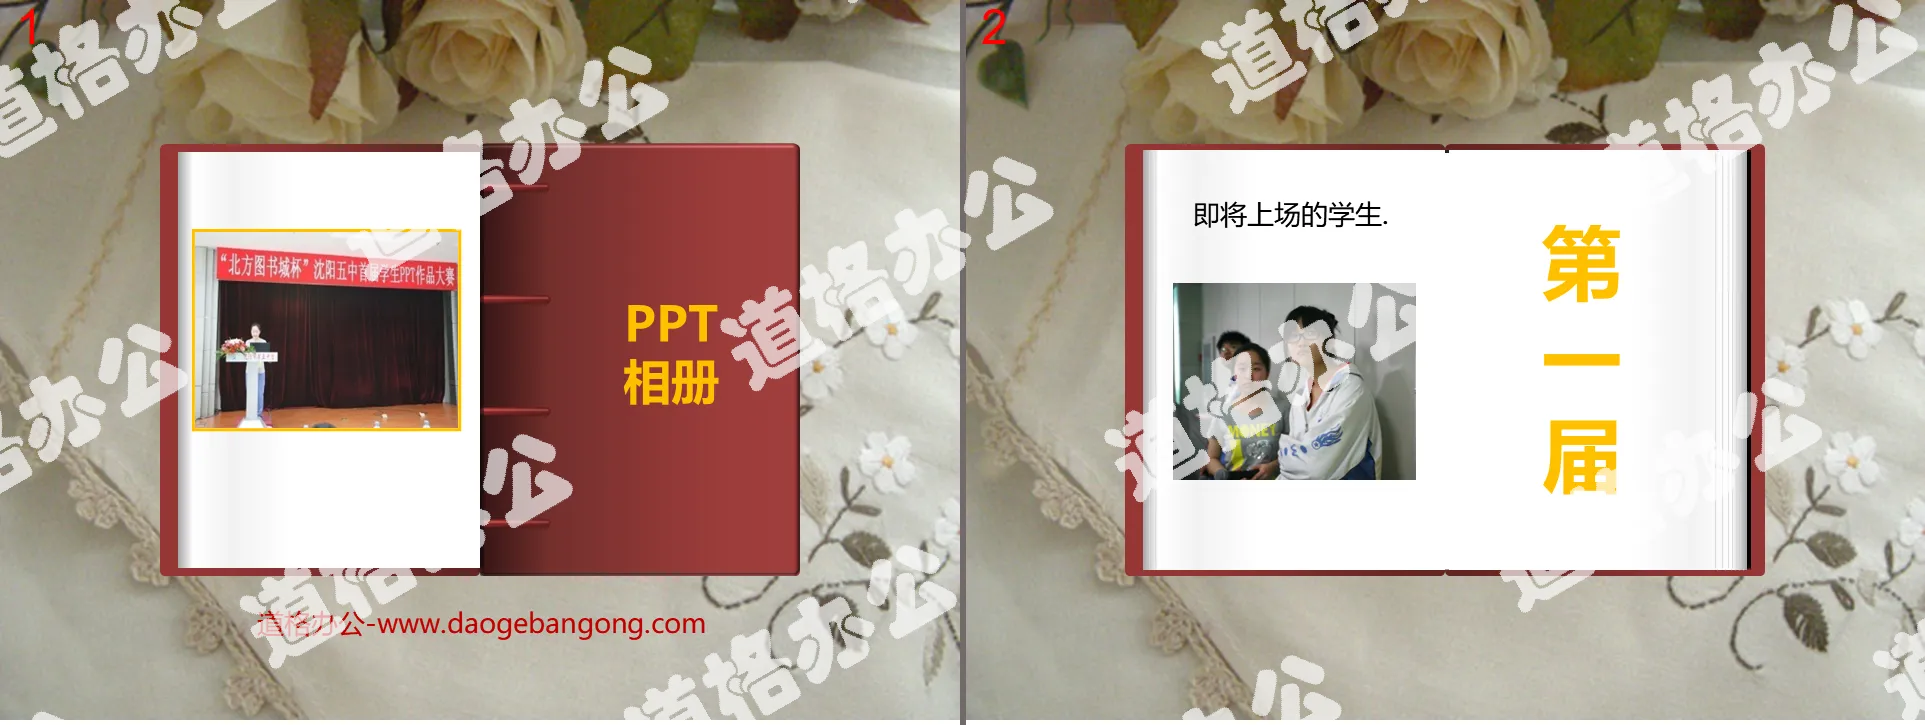 Flipping book effect PPT dynamic photo album